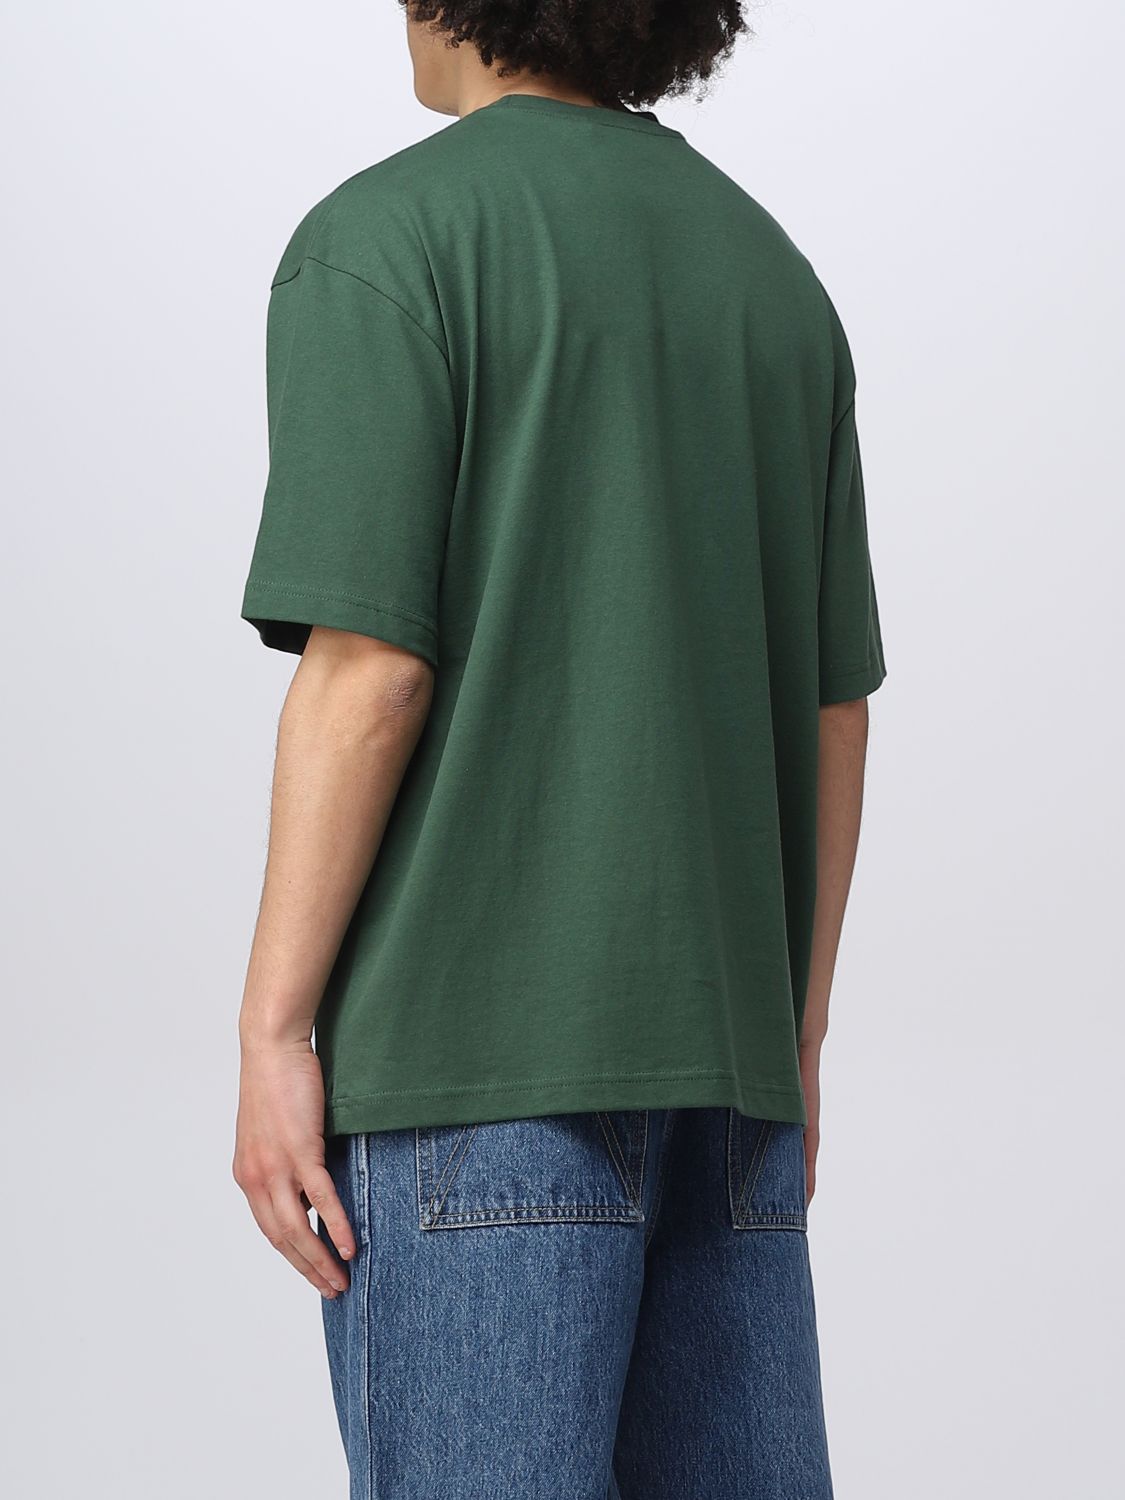 AXEL ARIGATO: t-shirt for man - Green | Axel Arigato t-shirt A1149004 ...